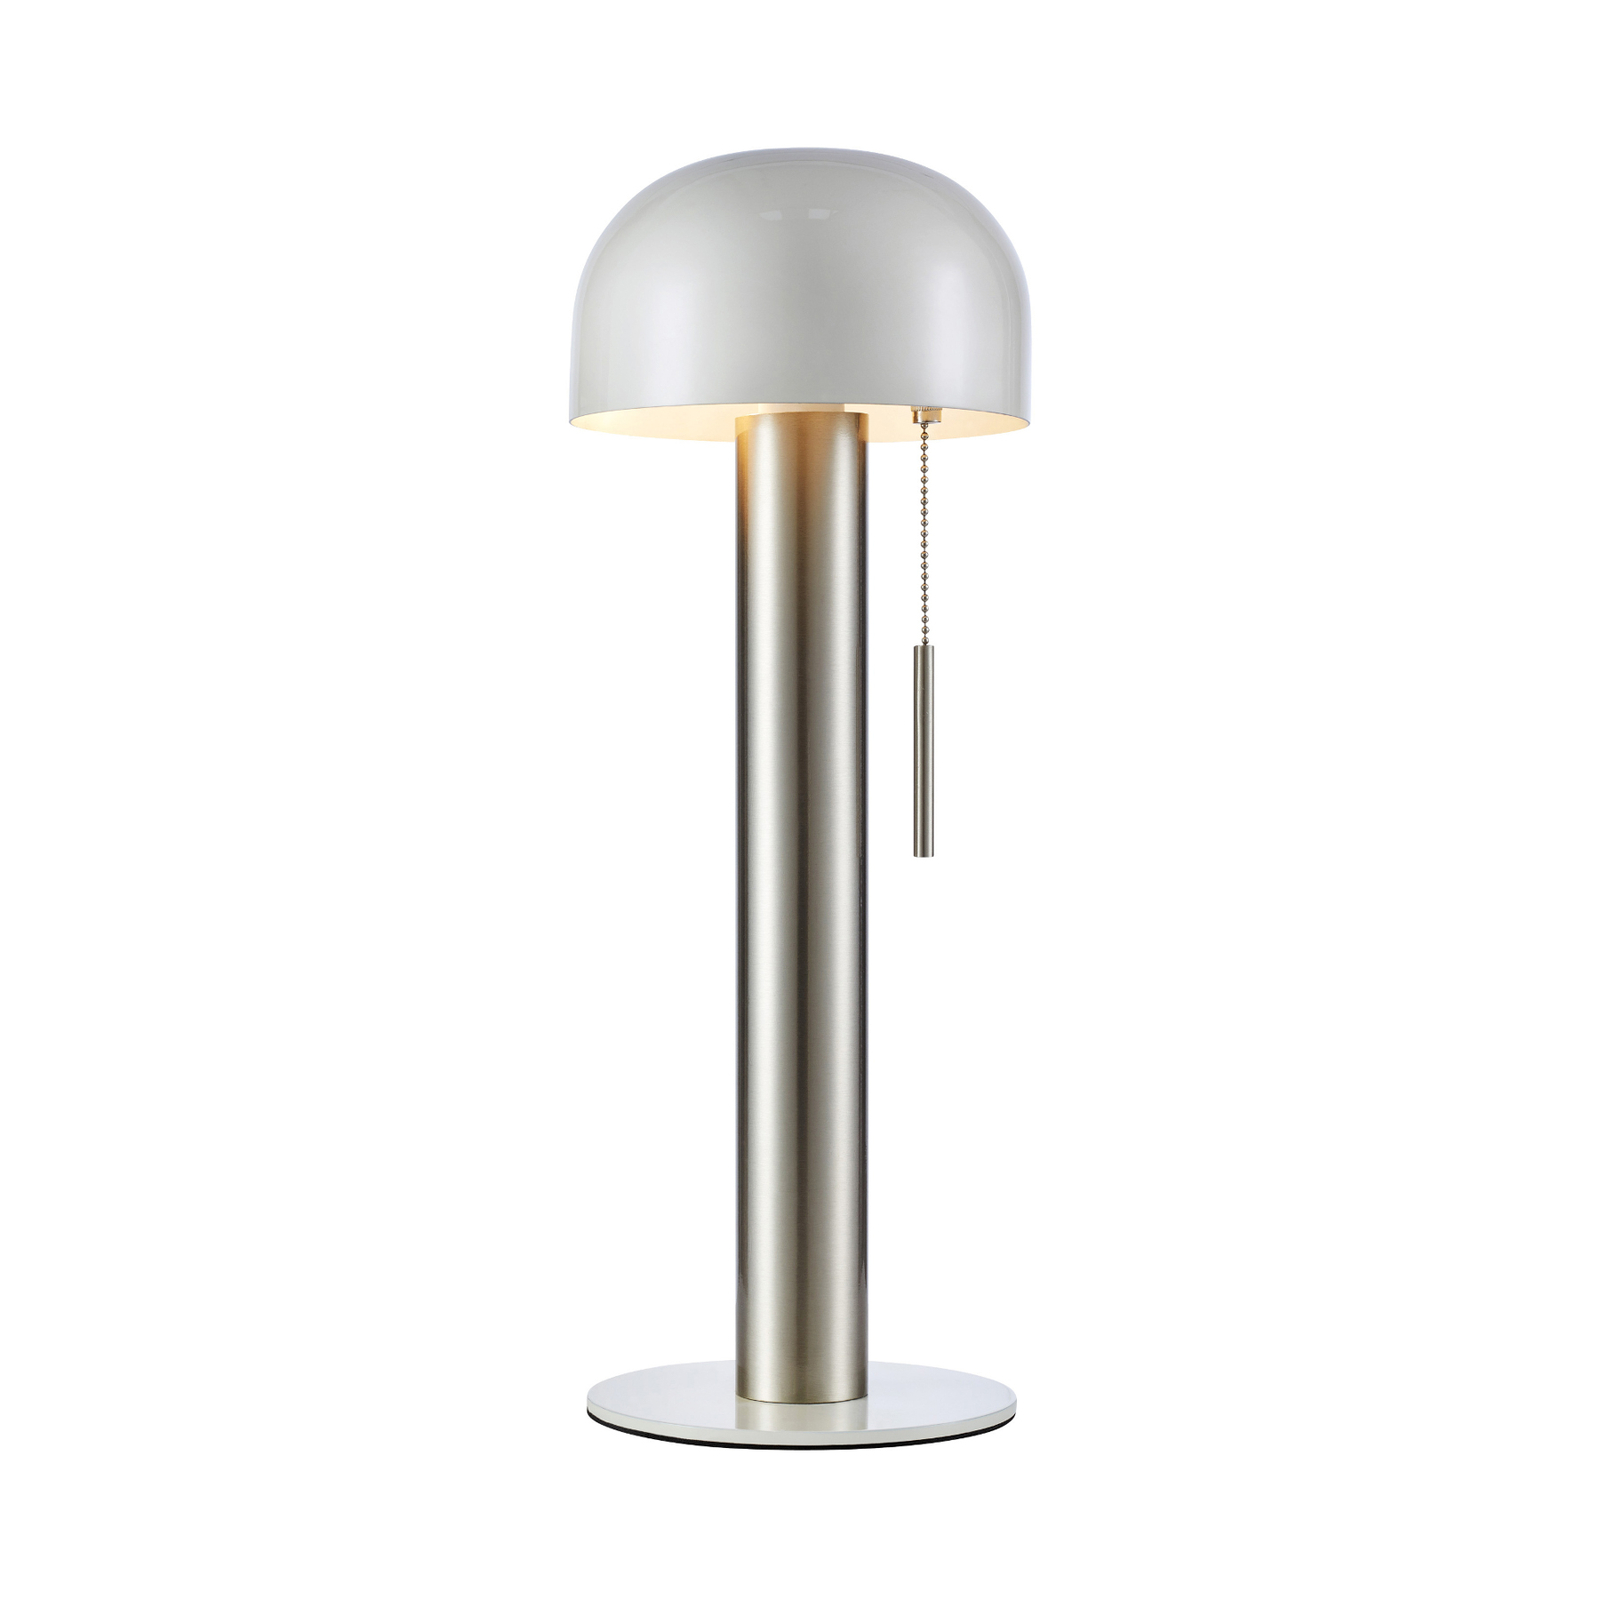 Costa metal table lamp, white/nickel